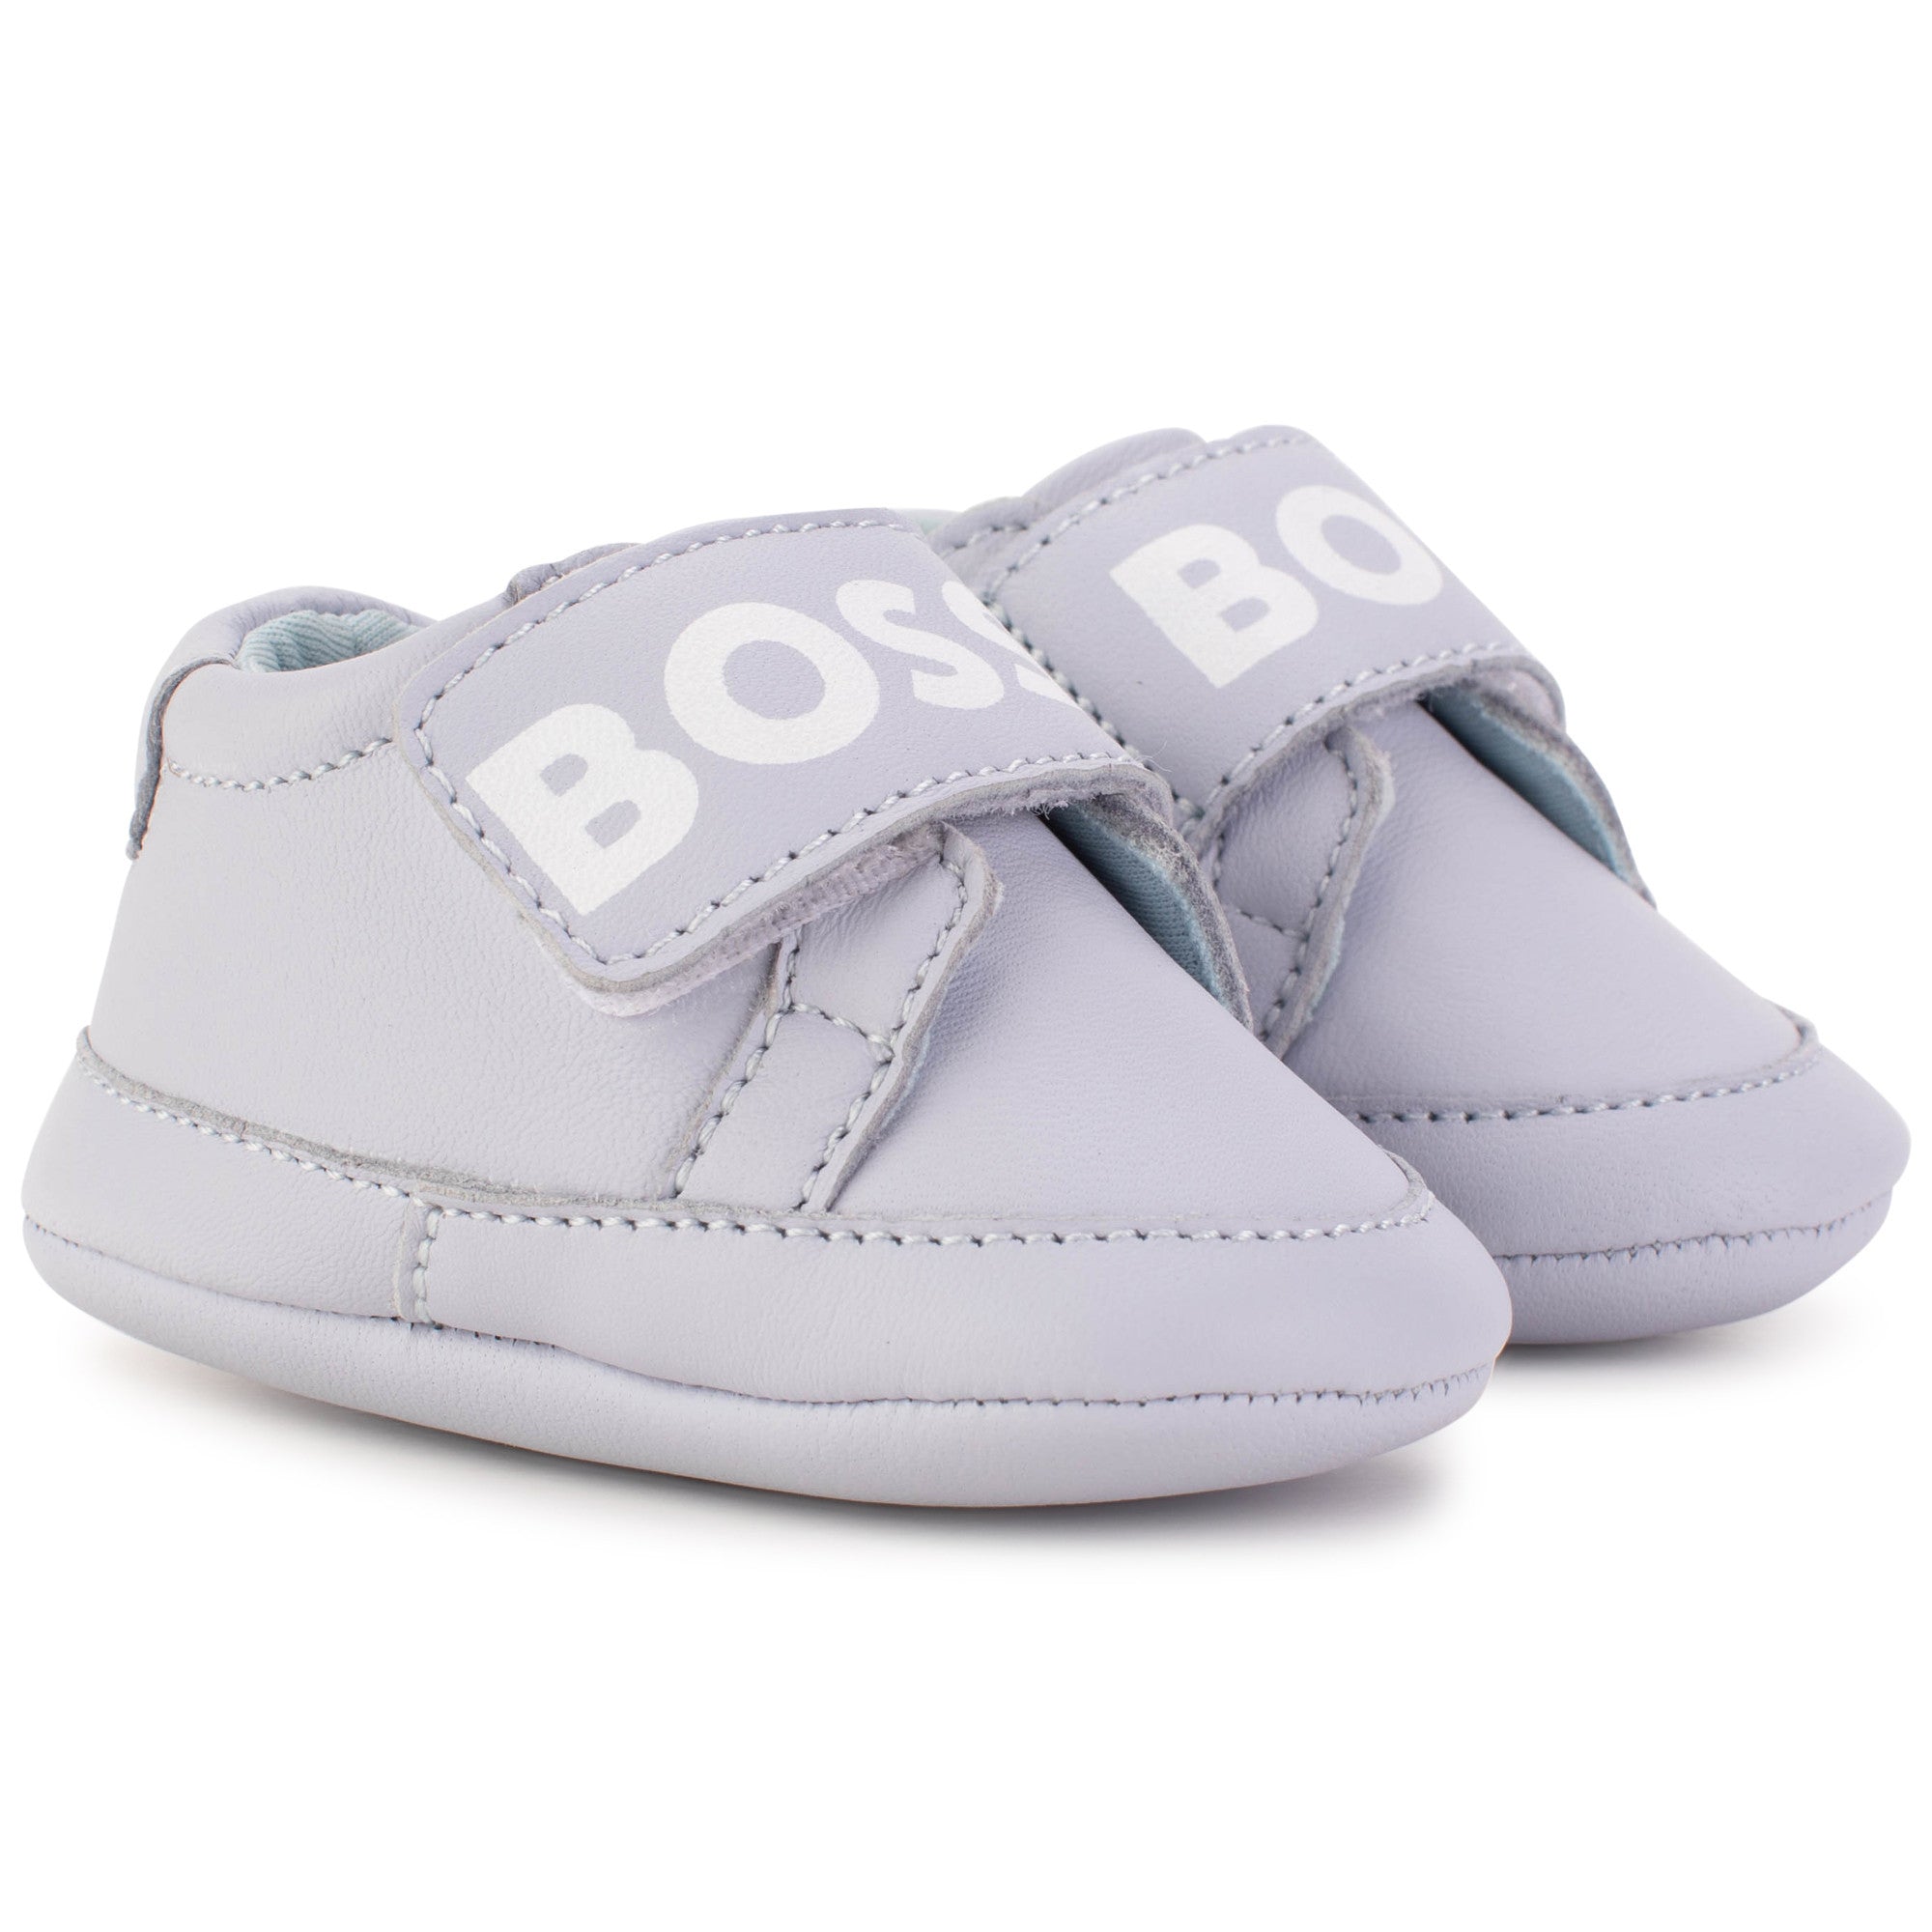 Hugo Boss Baby Boy Shoes